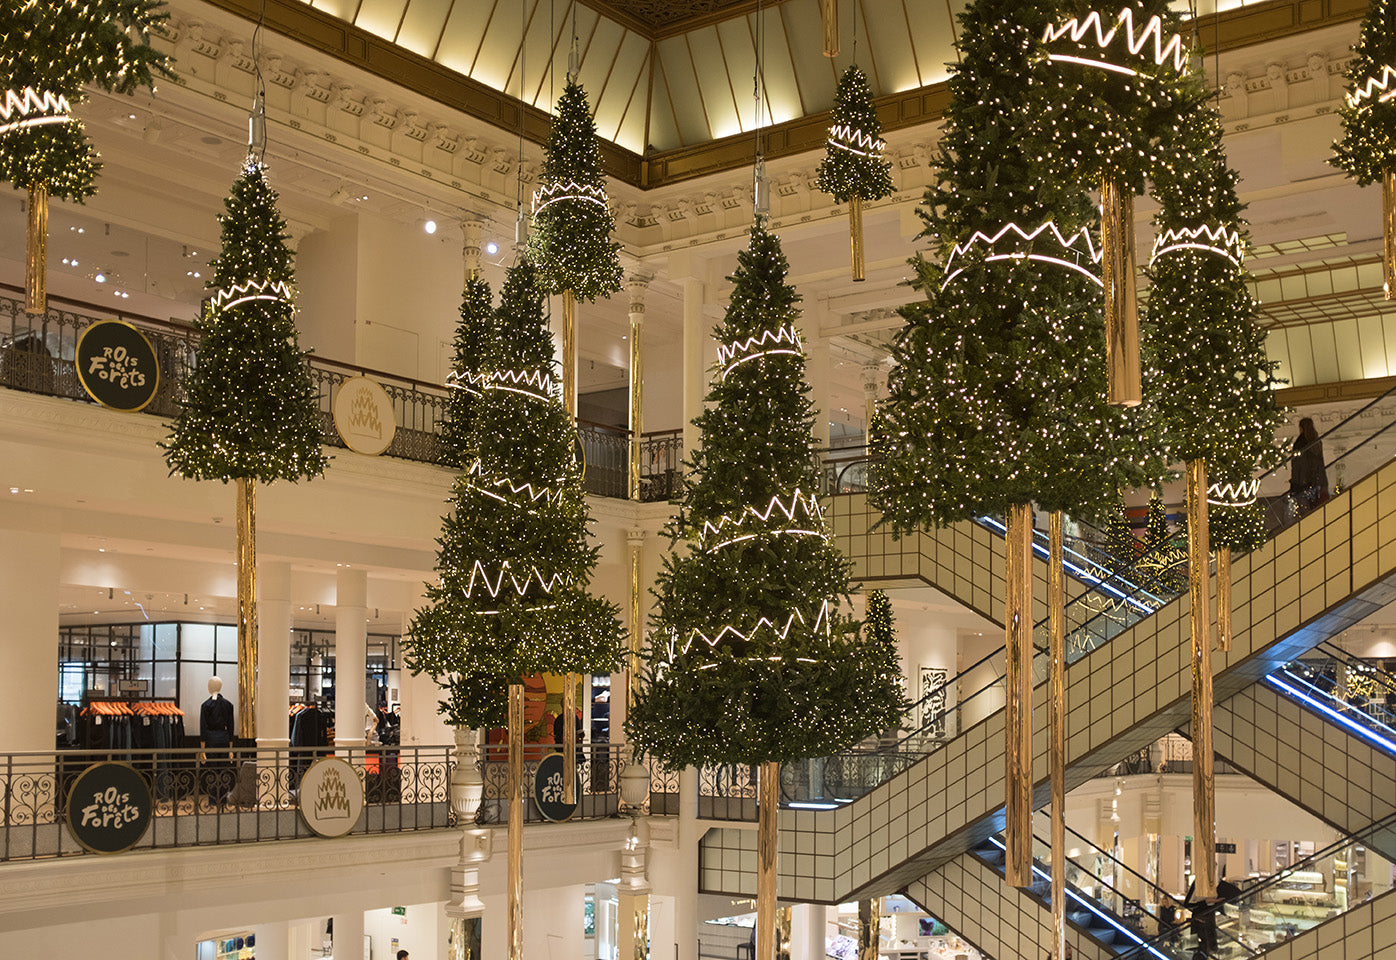 Bon Marché Christmas Trees - Everyday Parisian